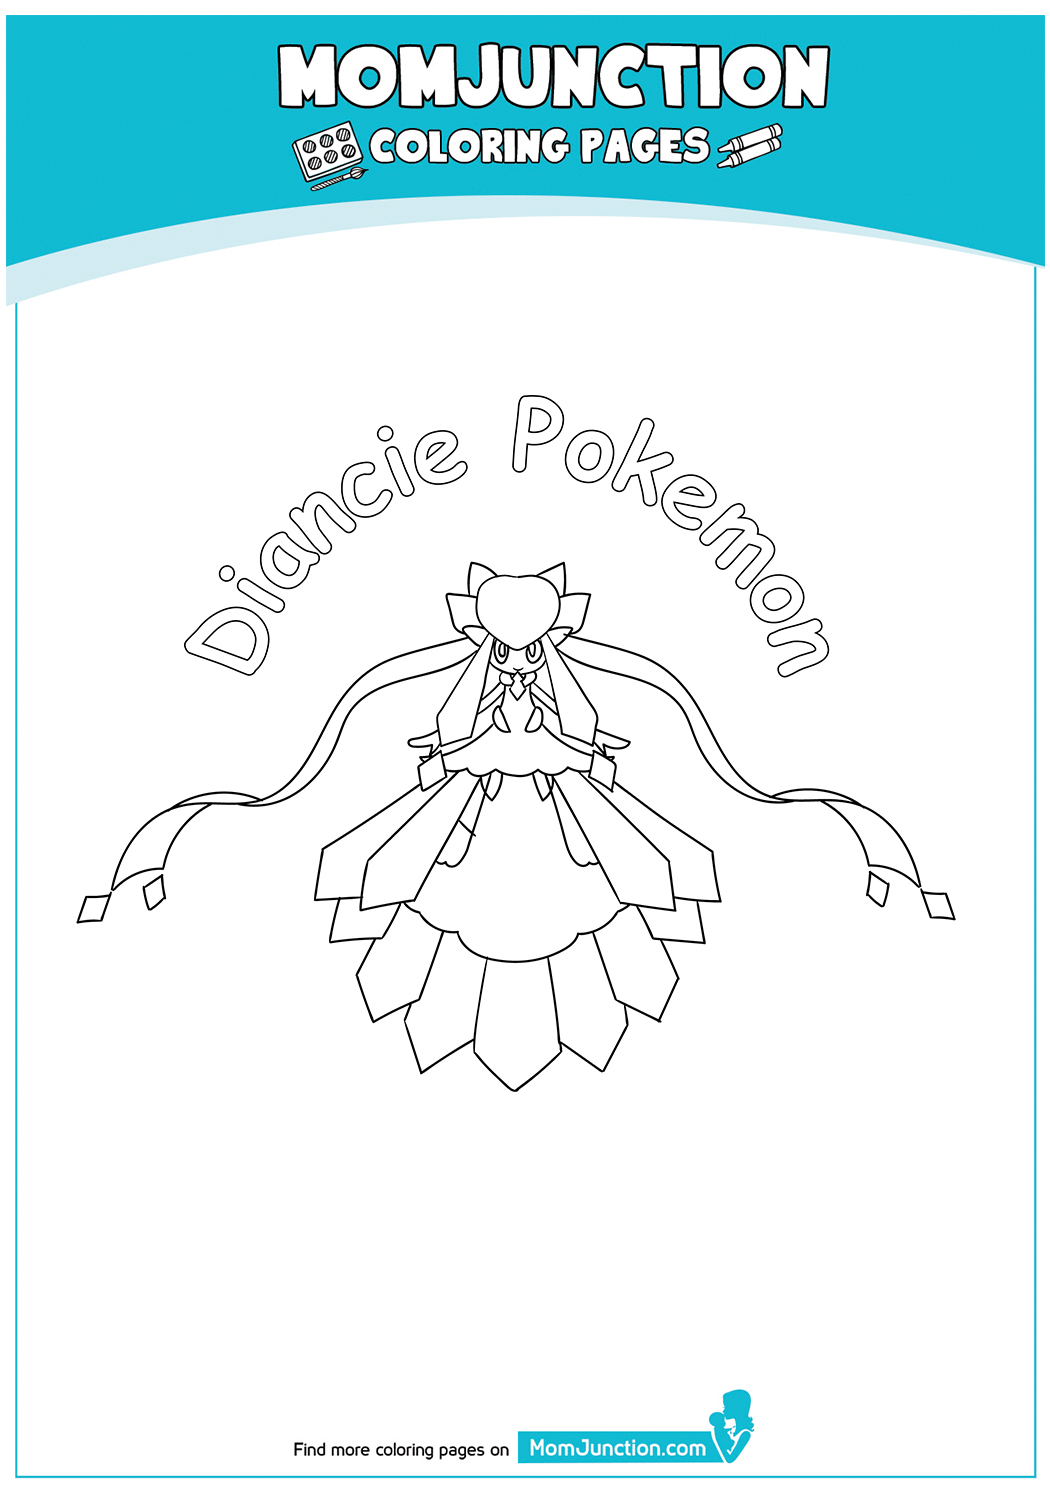 Diancie-Pokemon-17